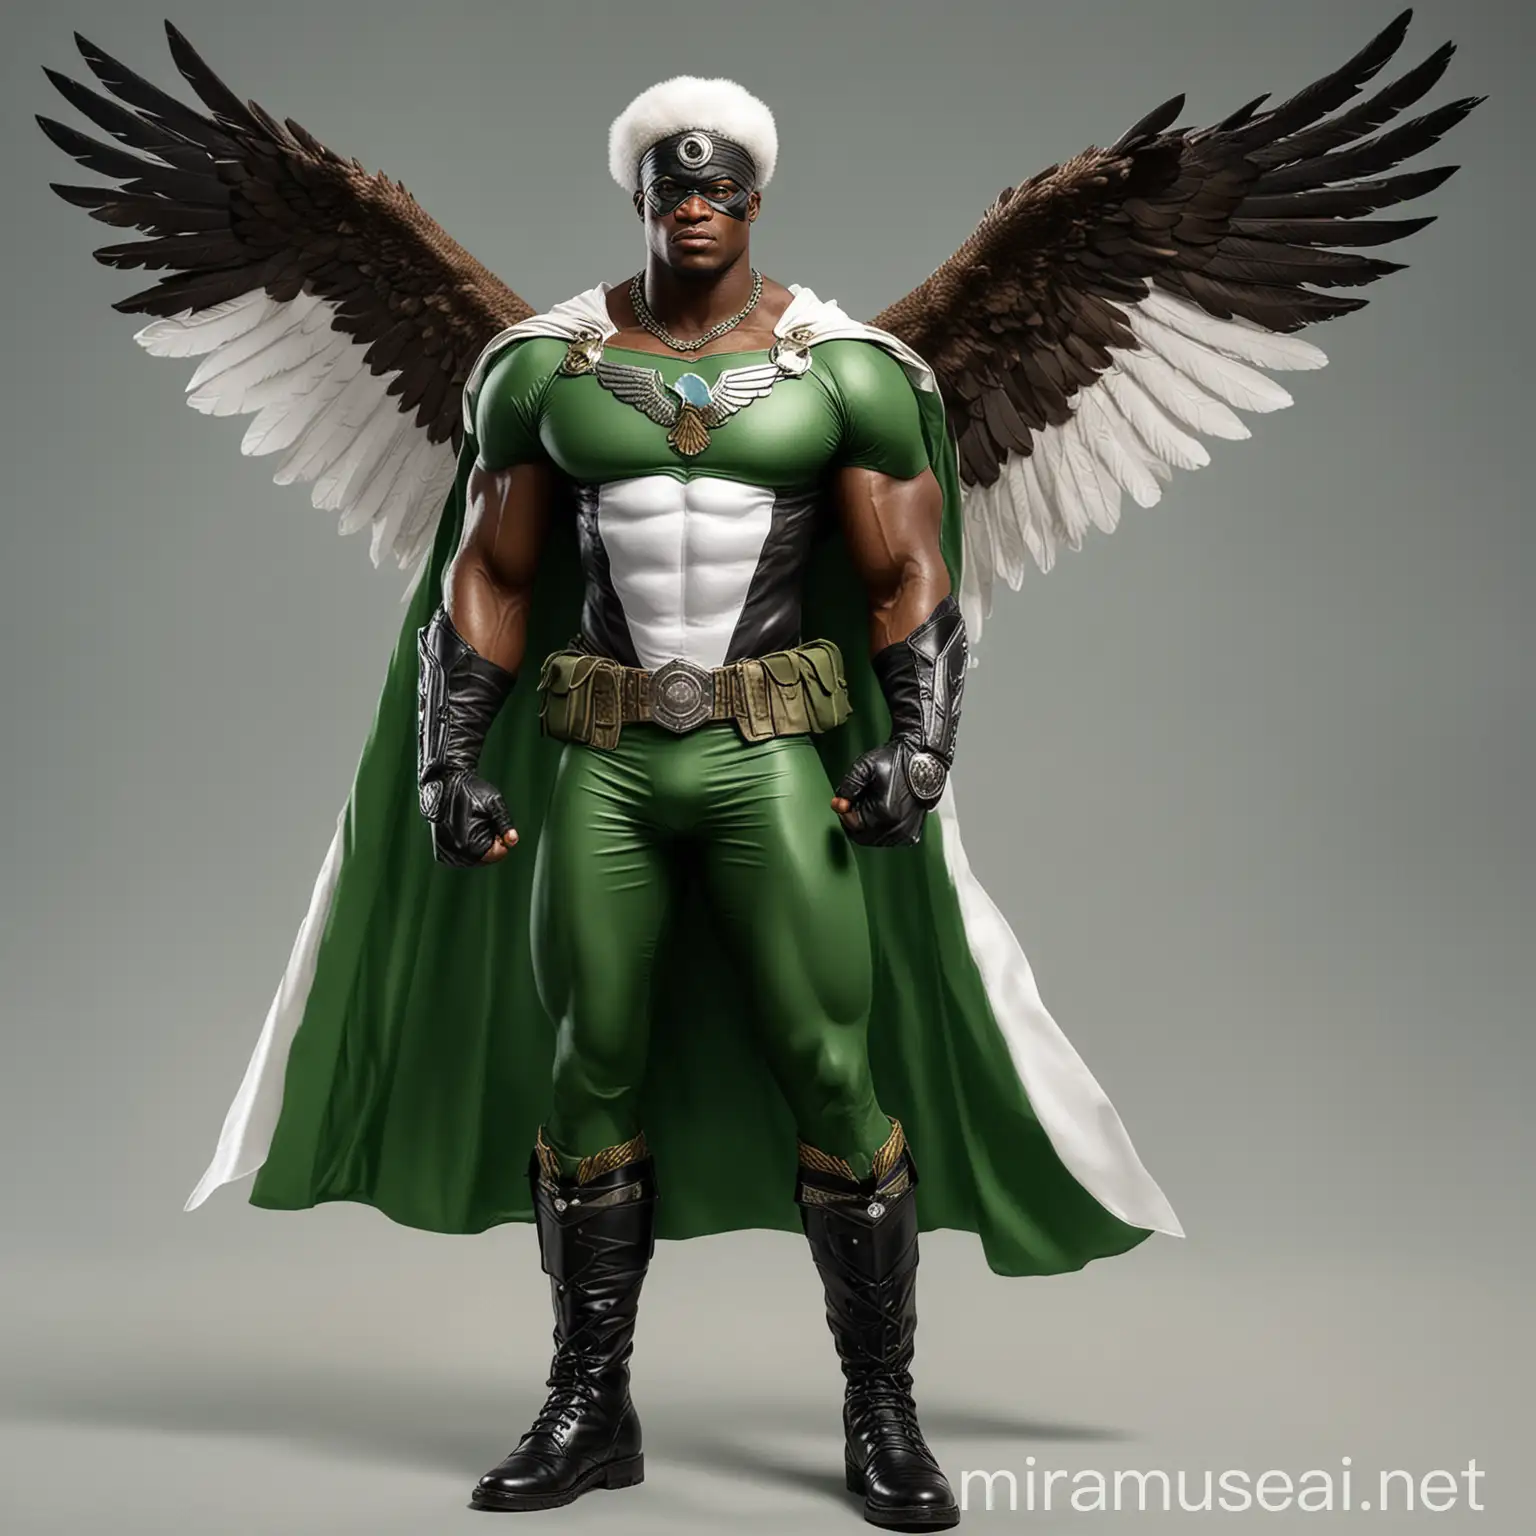 Nigerian Superhero Captain Eagle in Green and White Costume